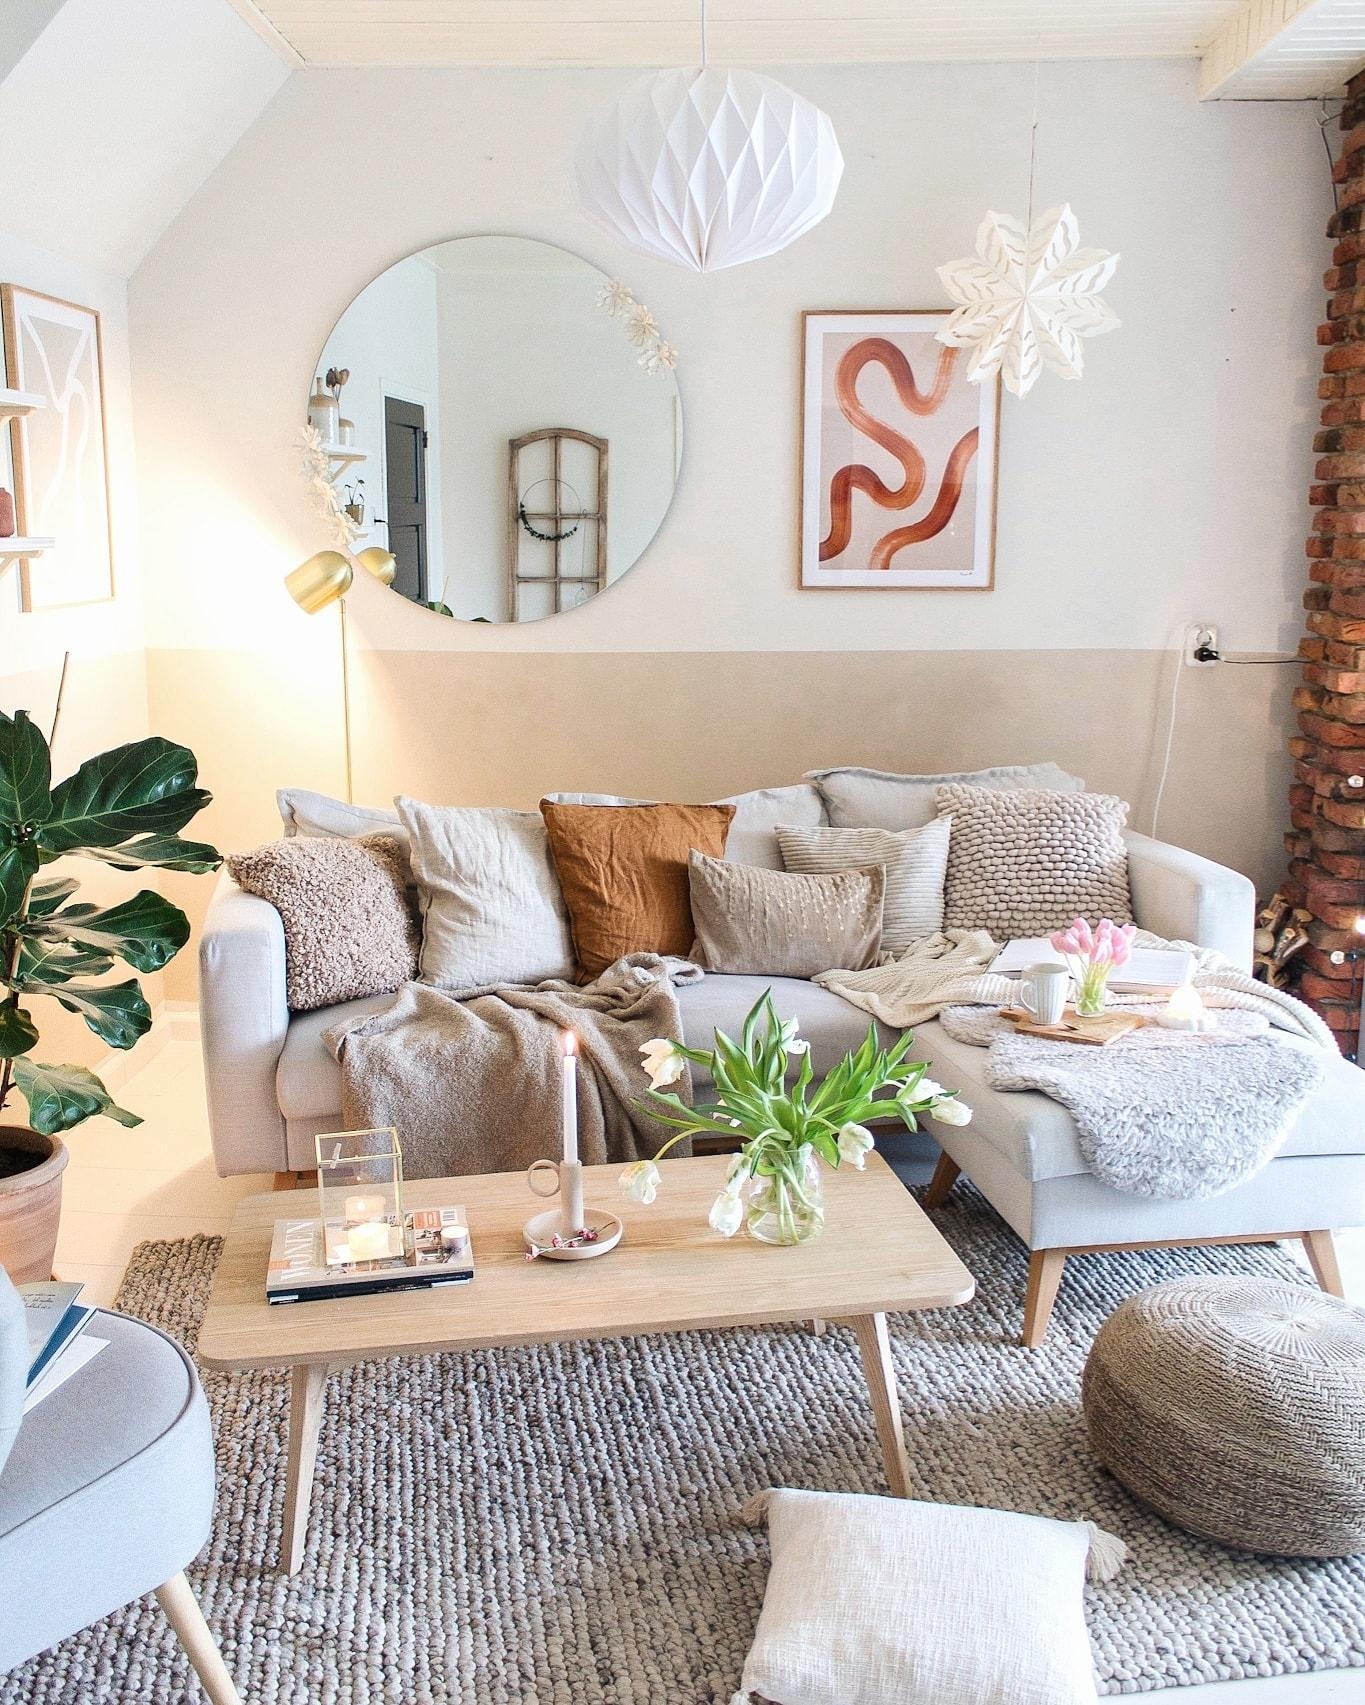 Feierabend ❤️
#sofa #wohnzimmer #livingroom #hygge #cozy #skandi #nordic #beige #kissen